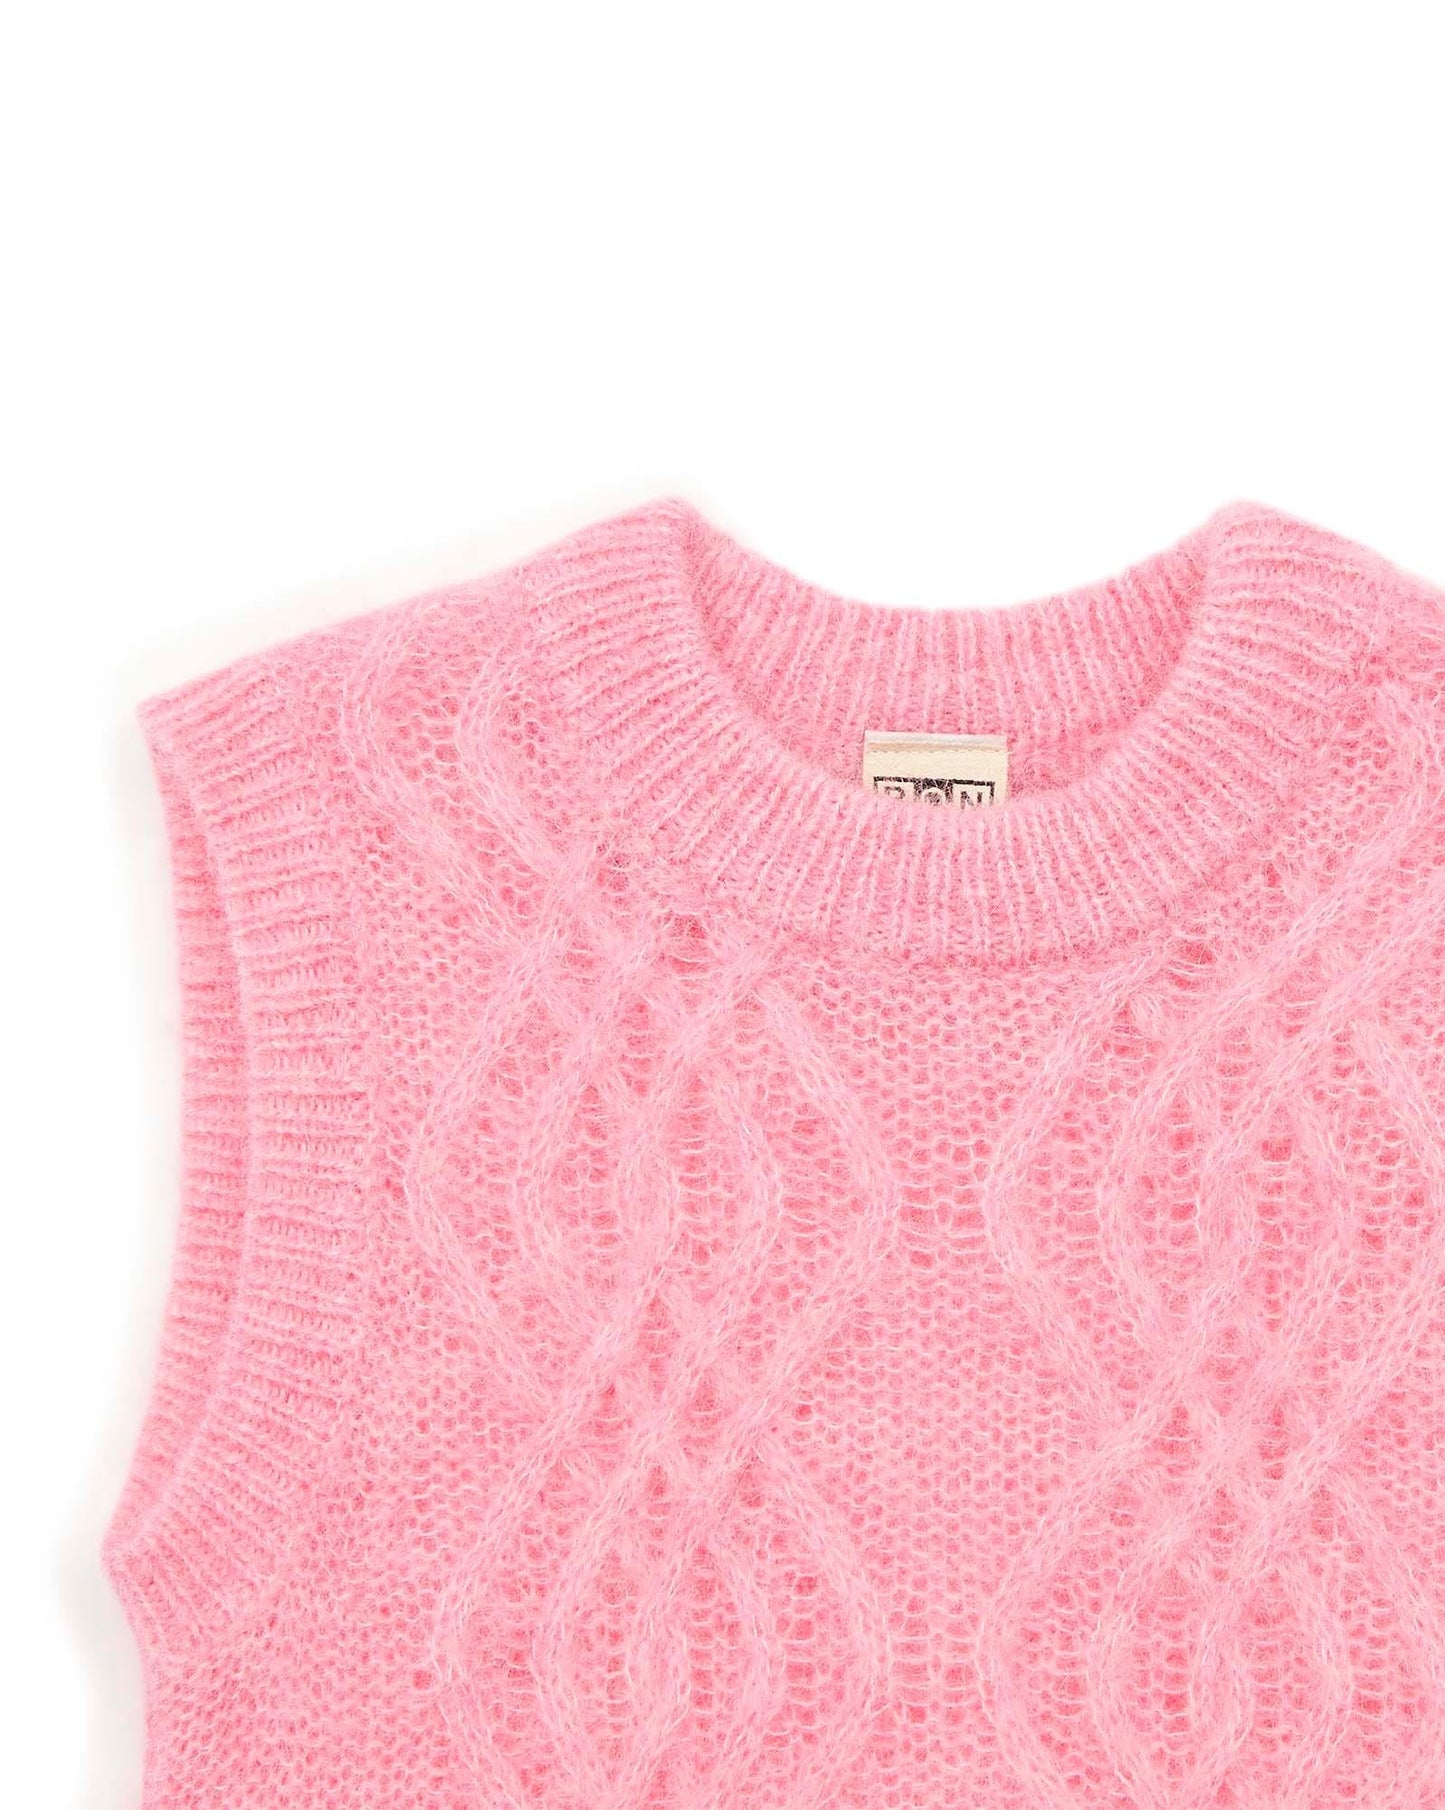 Sweater - Sleeveless Bernard Pink Cable